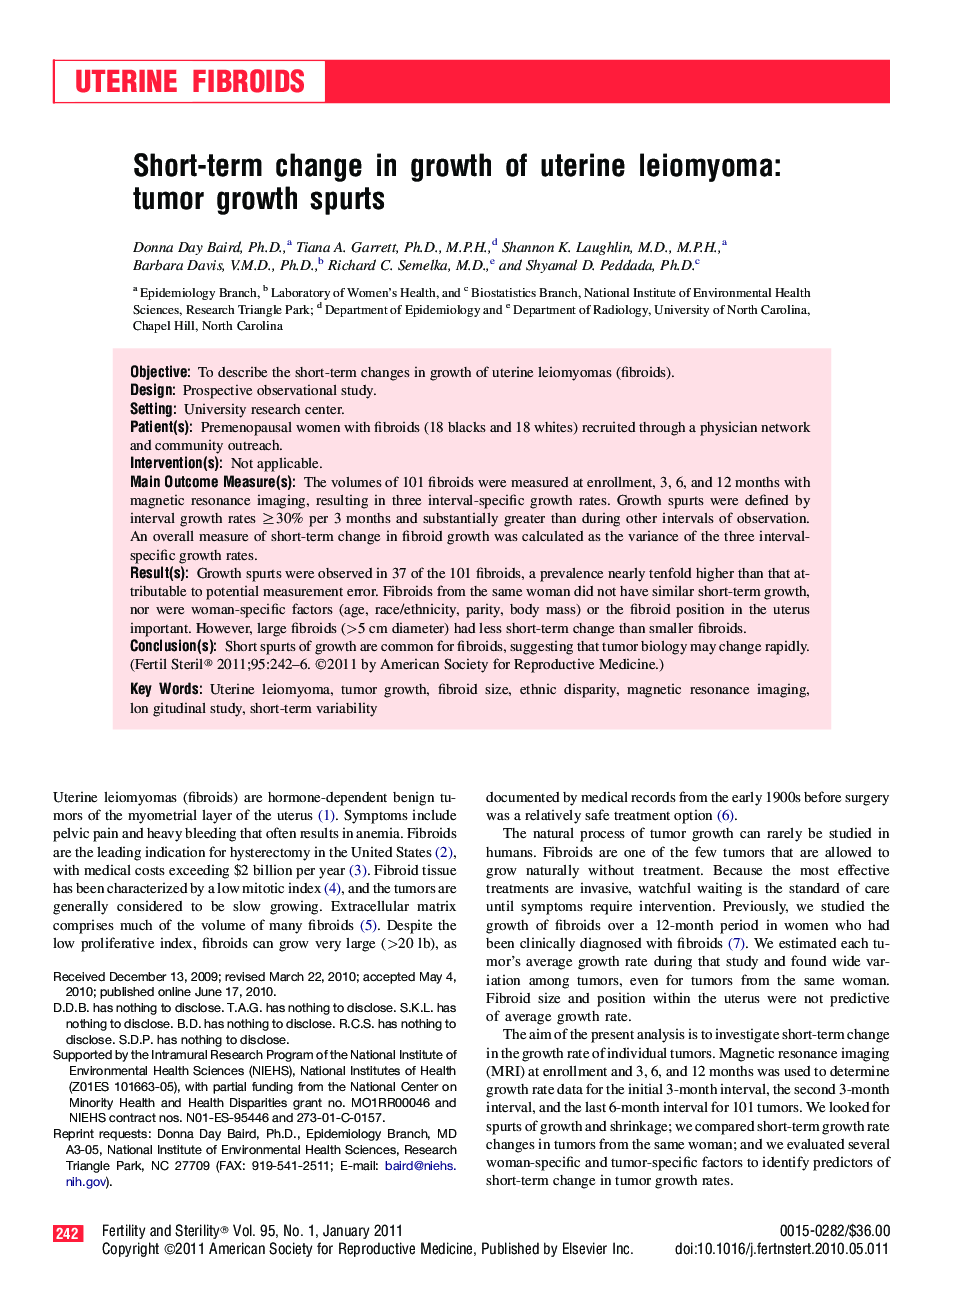 Short-term change in growth of uterine leiomyoma: tumor growth spurts 